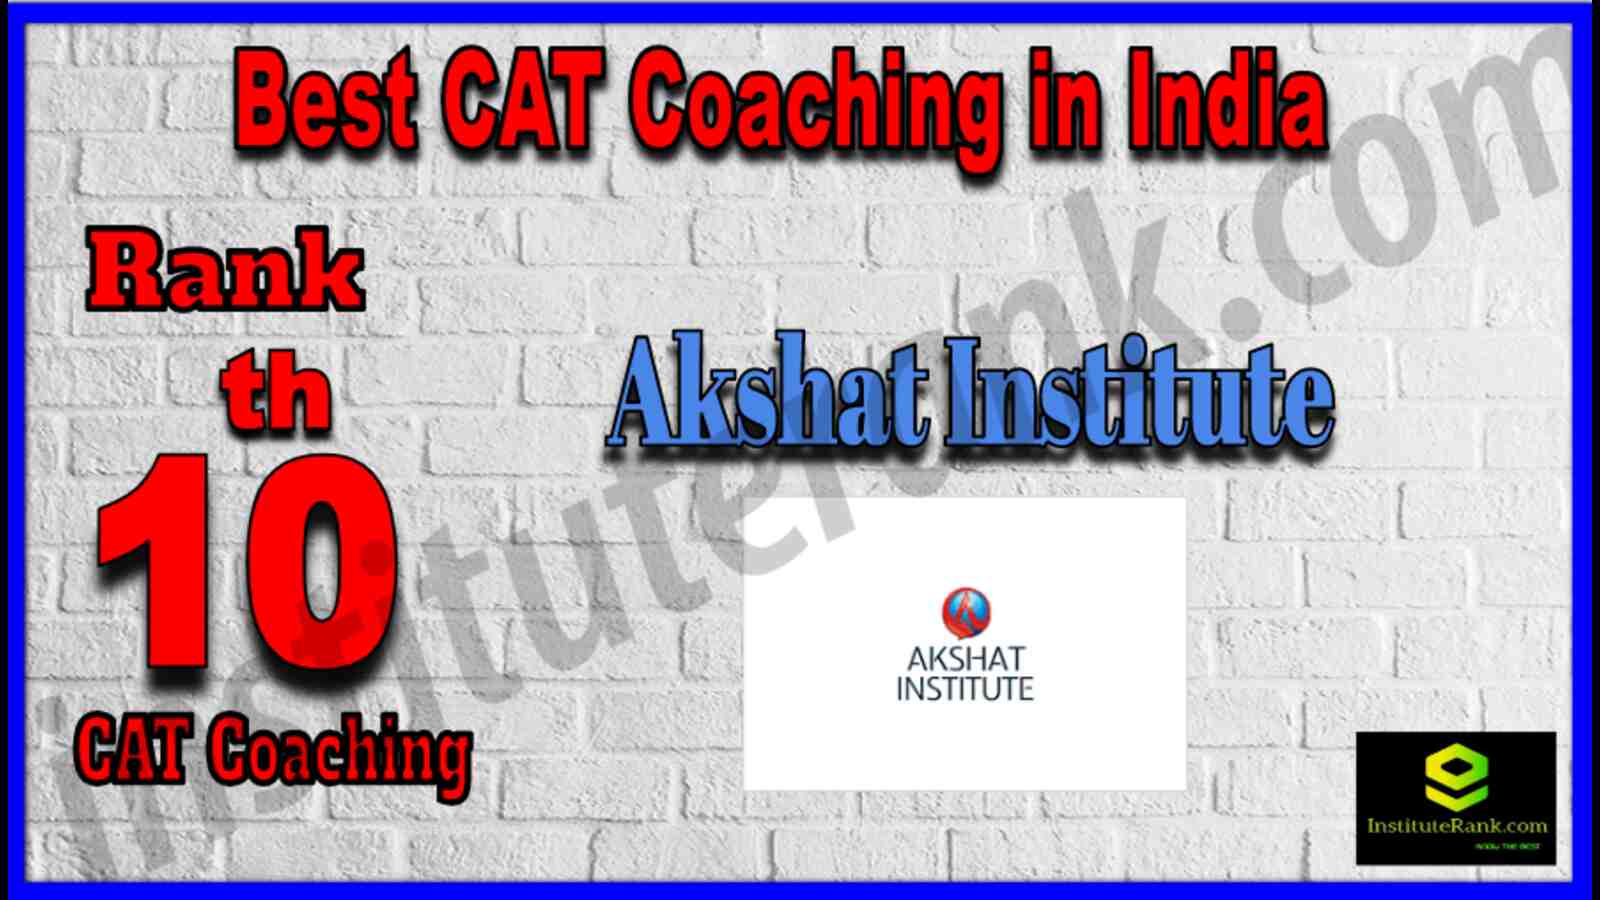 Rank 10 Best CAT Coaching in India